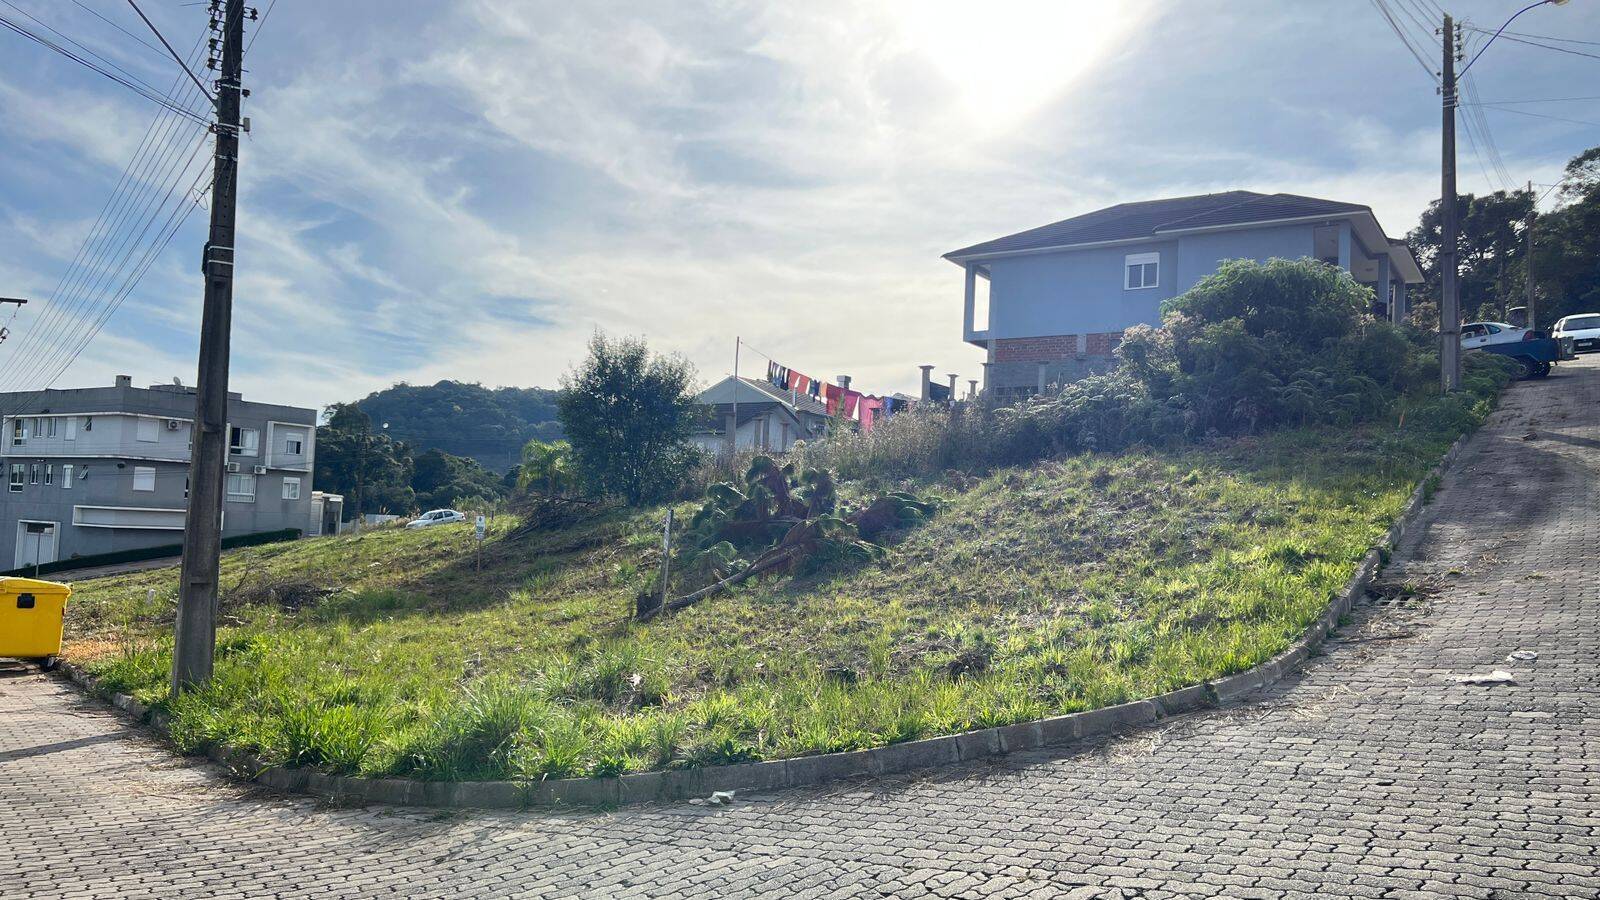 #252 - Terreno para Venda em Flores da Cunha - RS